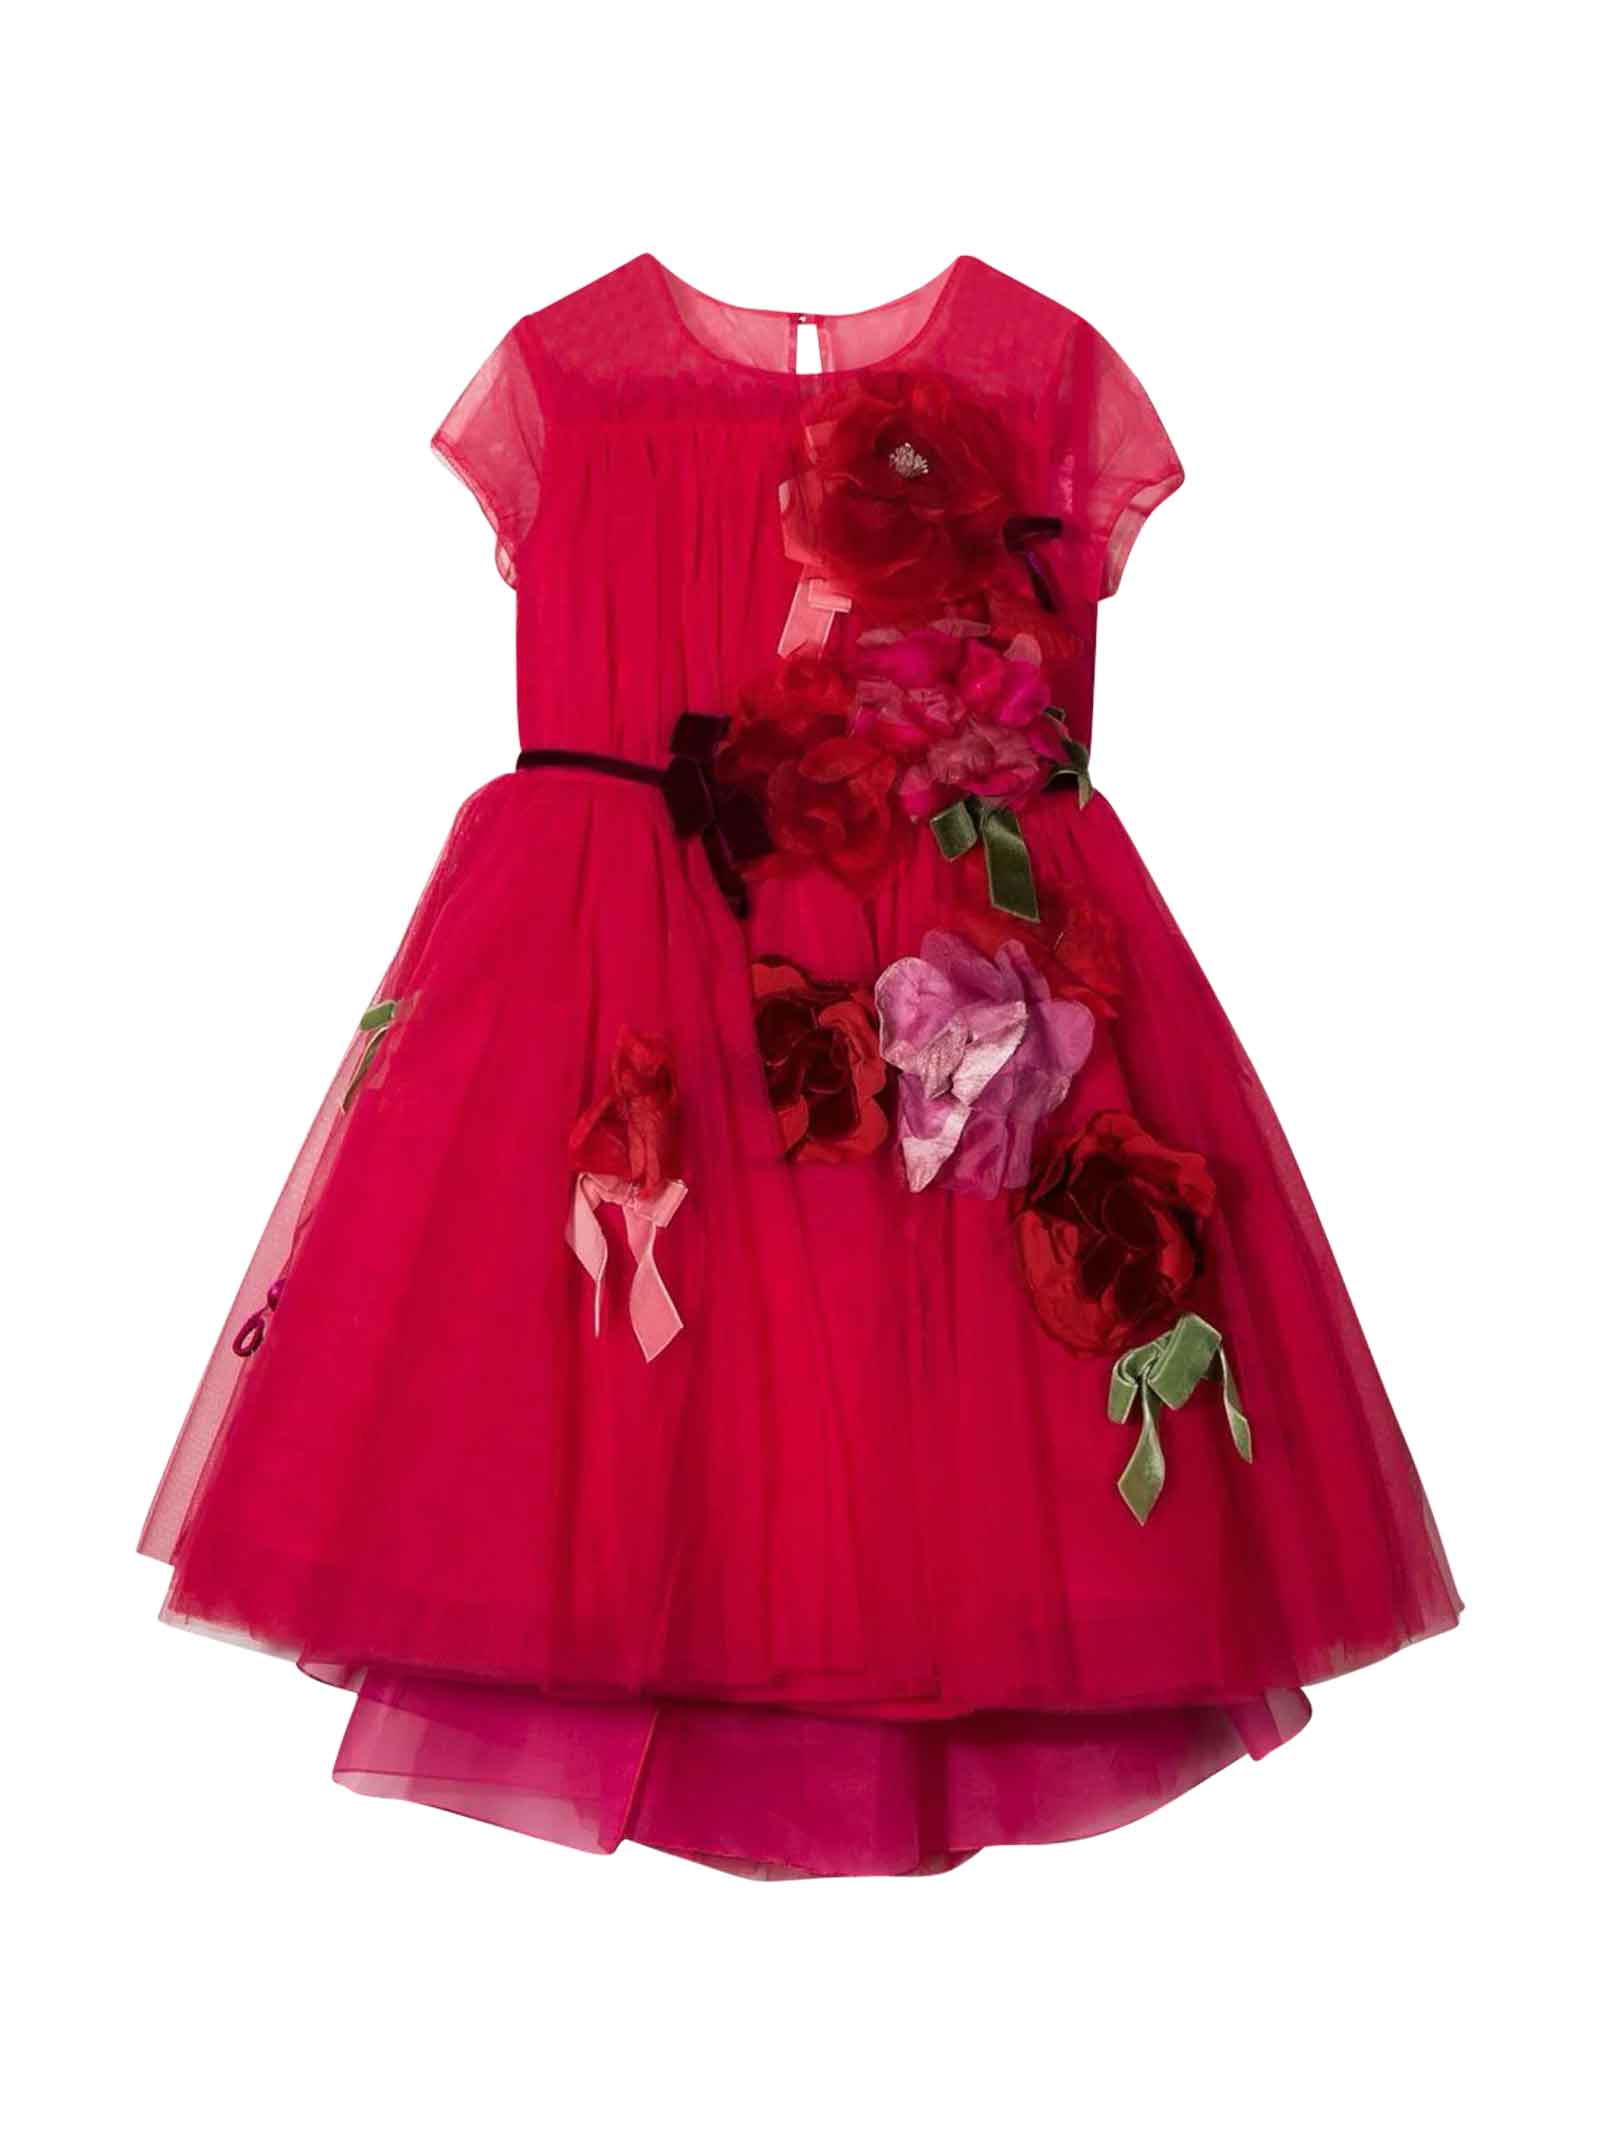 Marchesa Fuchsia Dress Girl Kids Couture